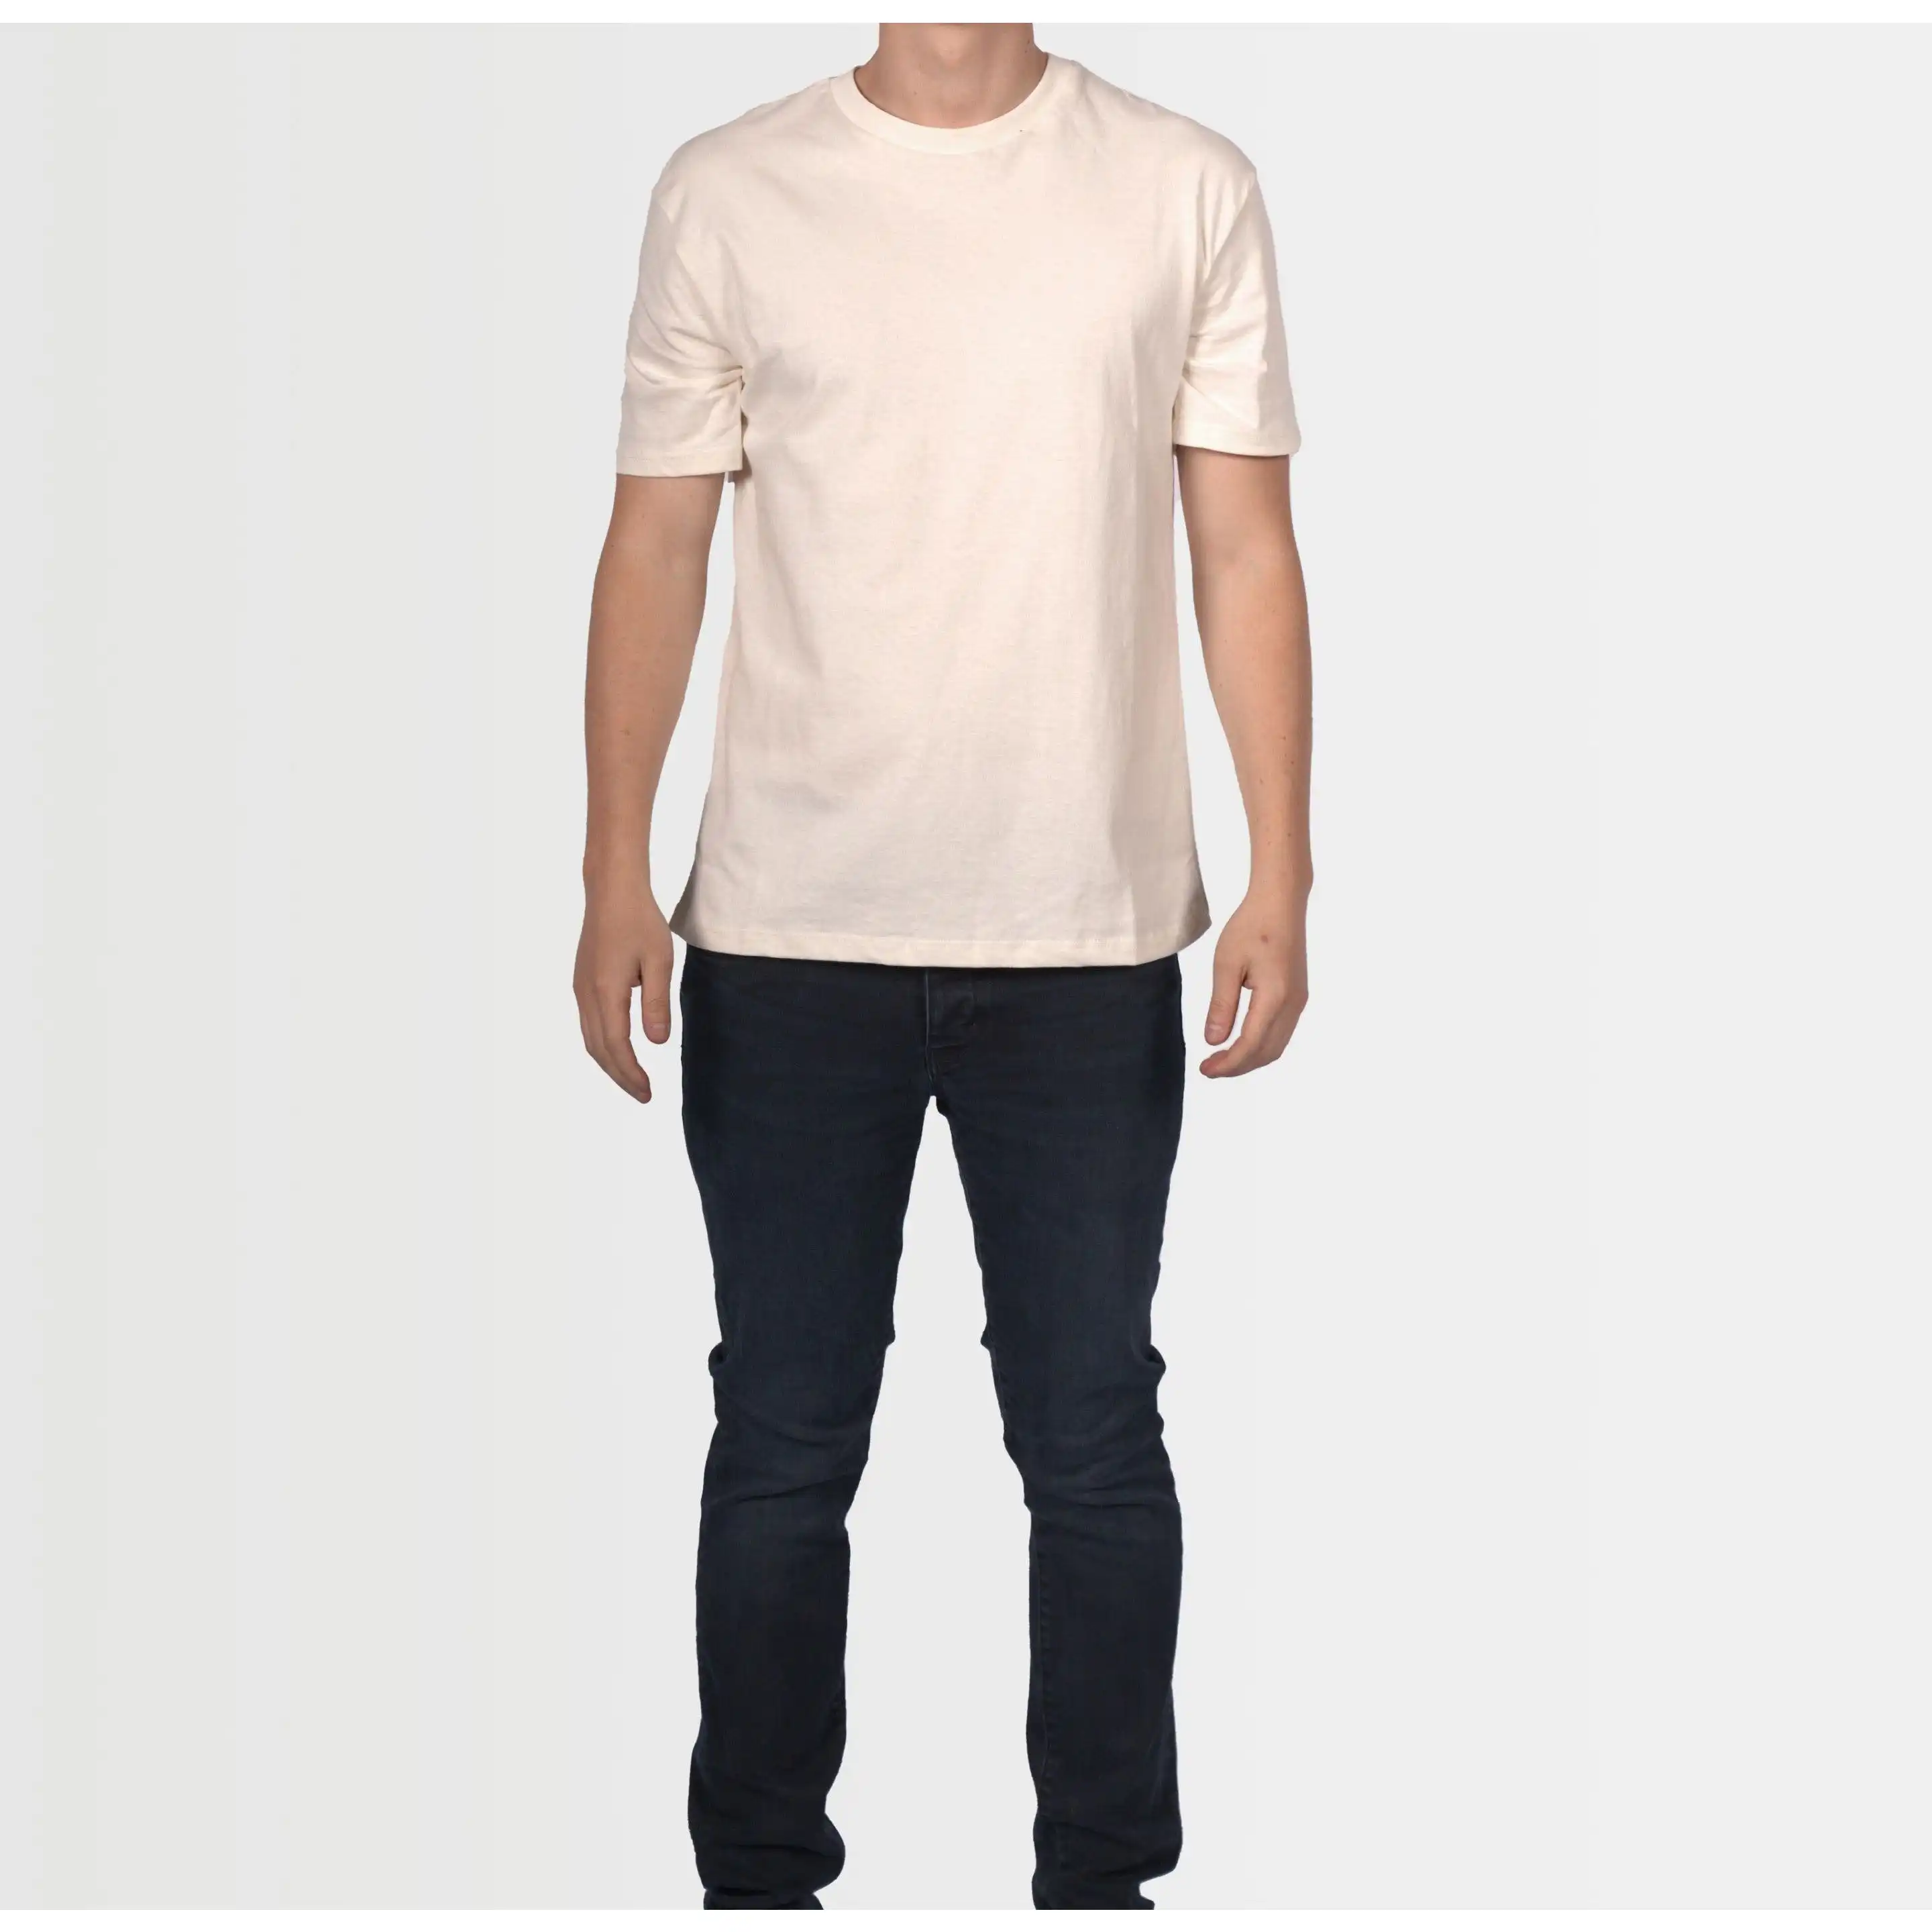 Topman Men's Oversized Fit T-shirt - Cream